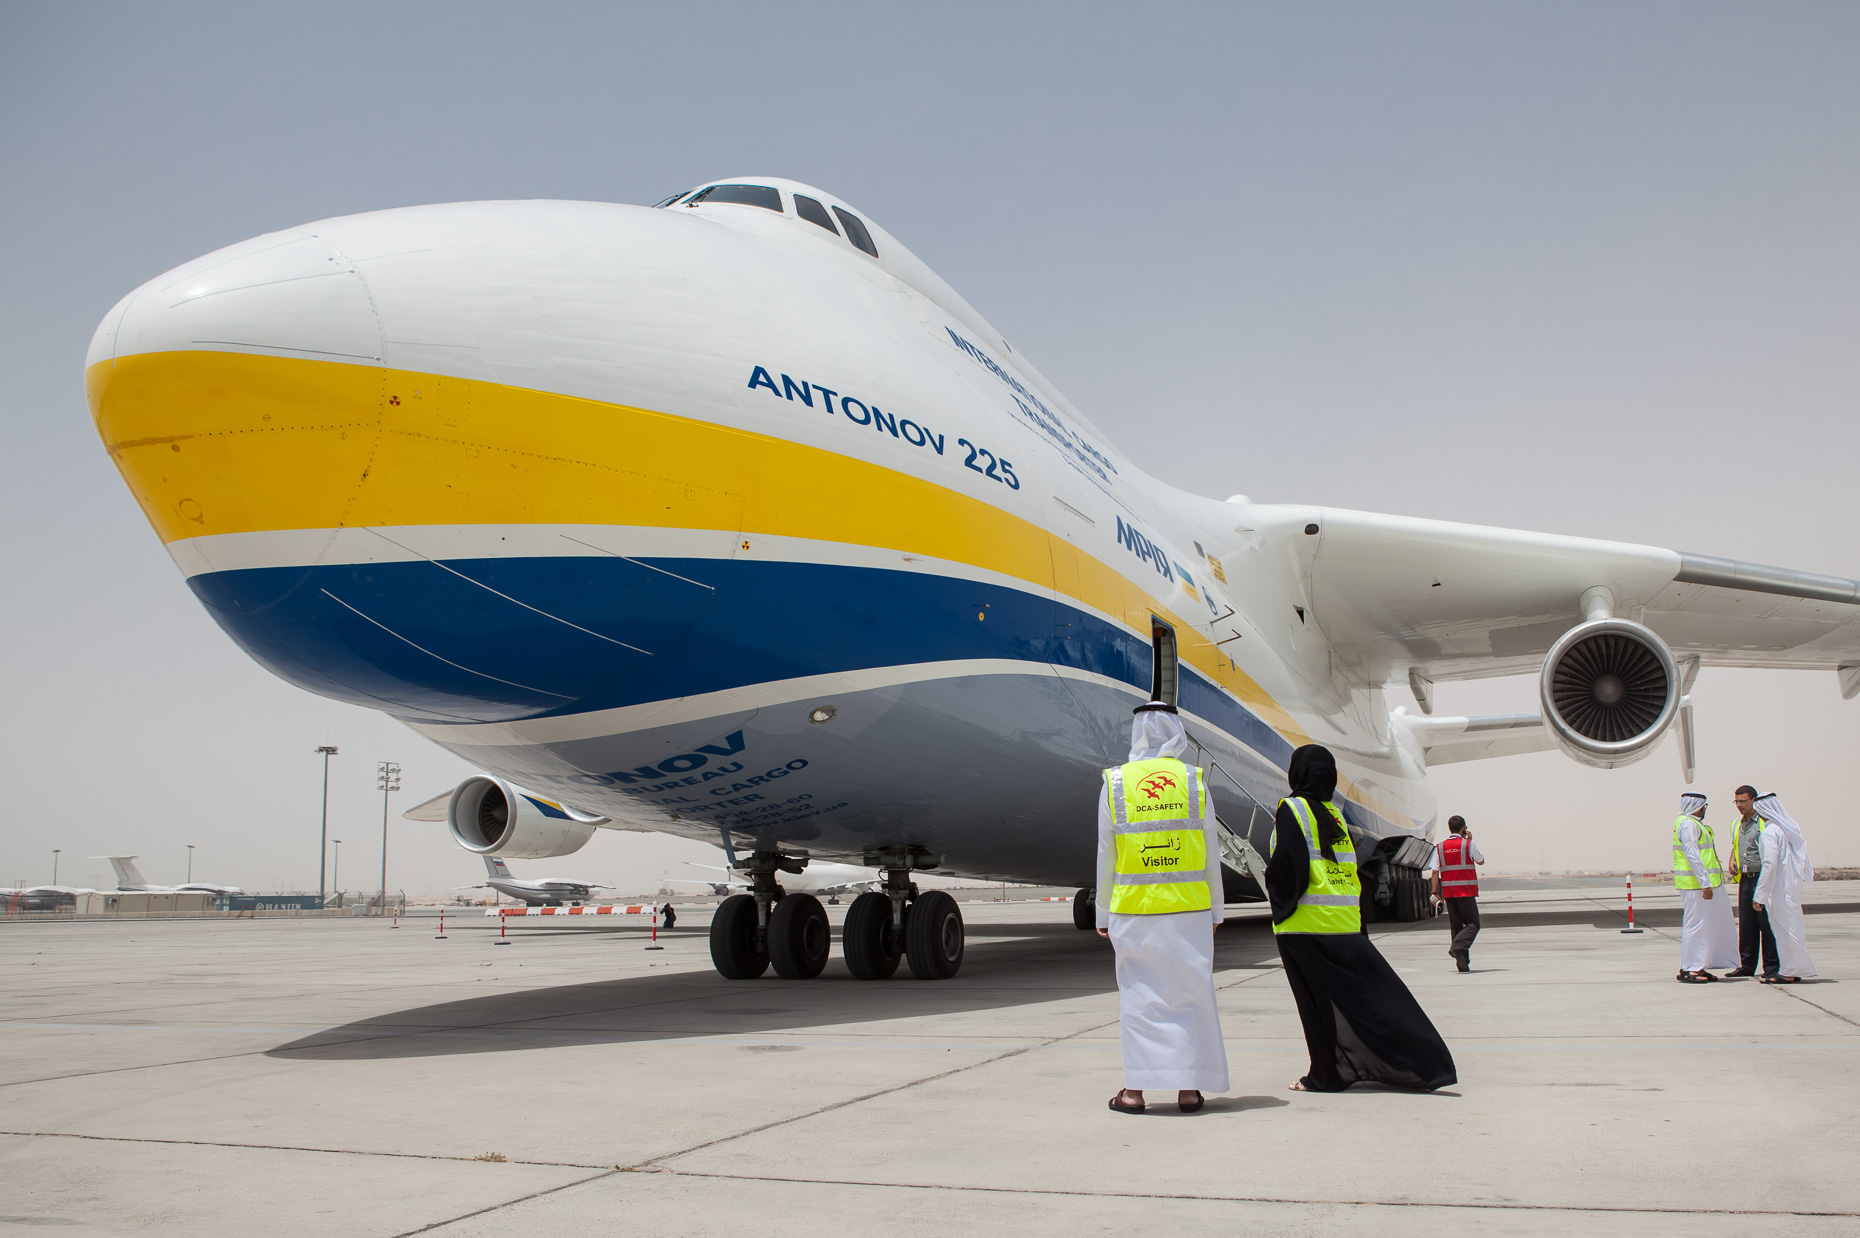 Antonov 225 Sharjah Airport | Oliver Jackson